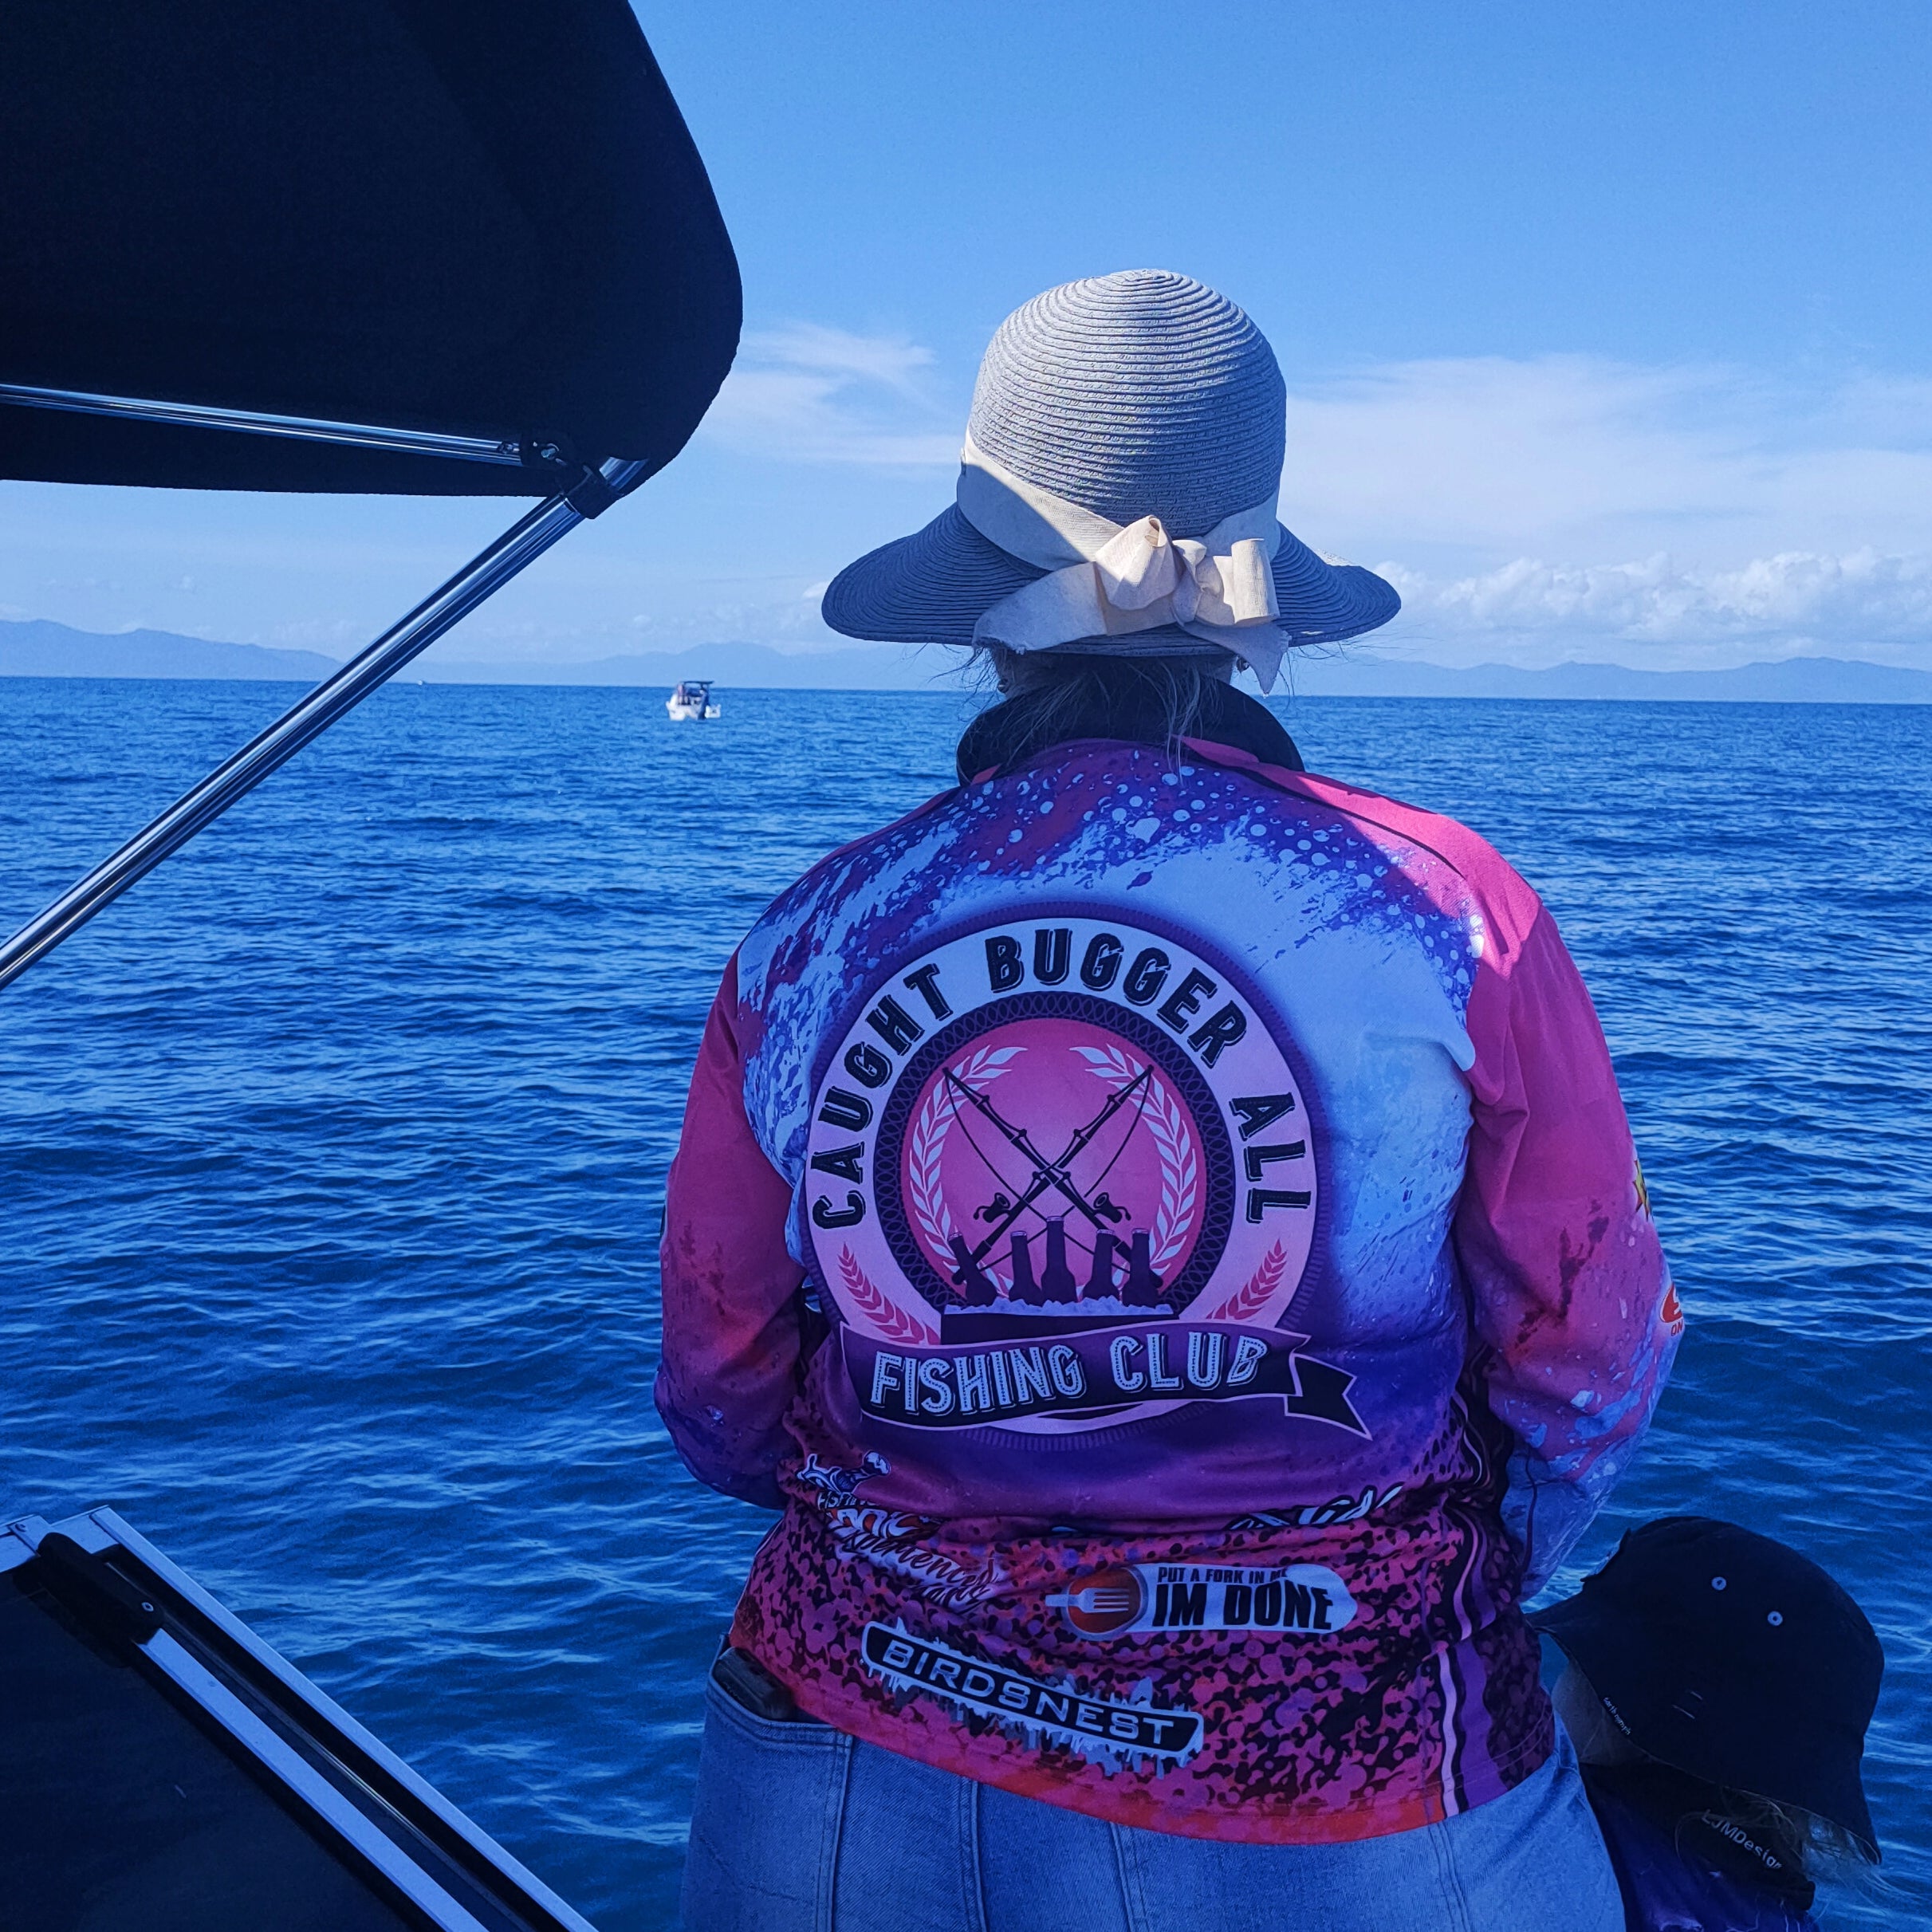 Hot Pink fishing shirt  Fishing shirts, Clothes design, Hot pink